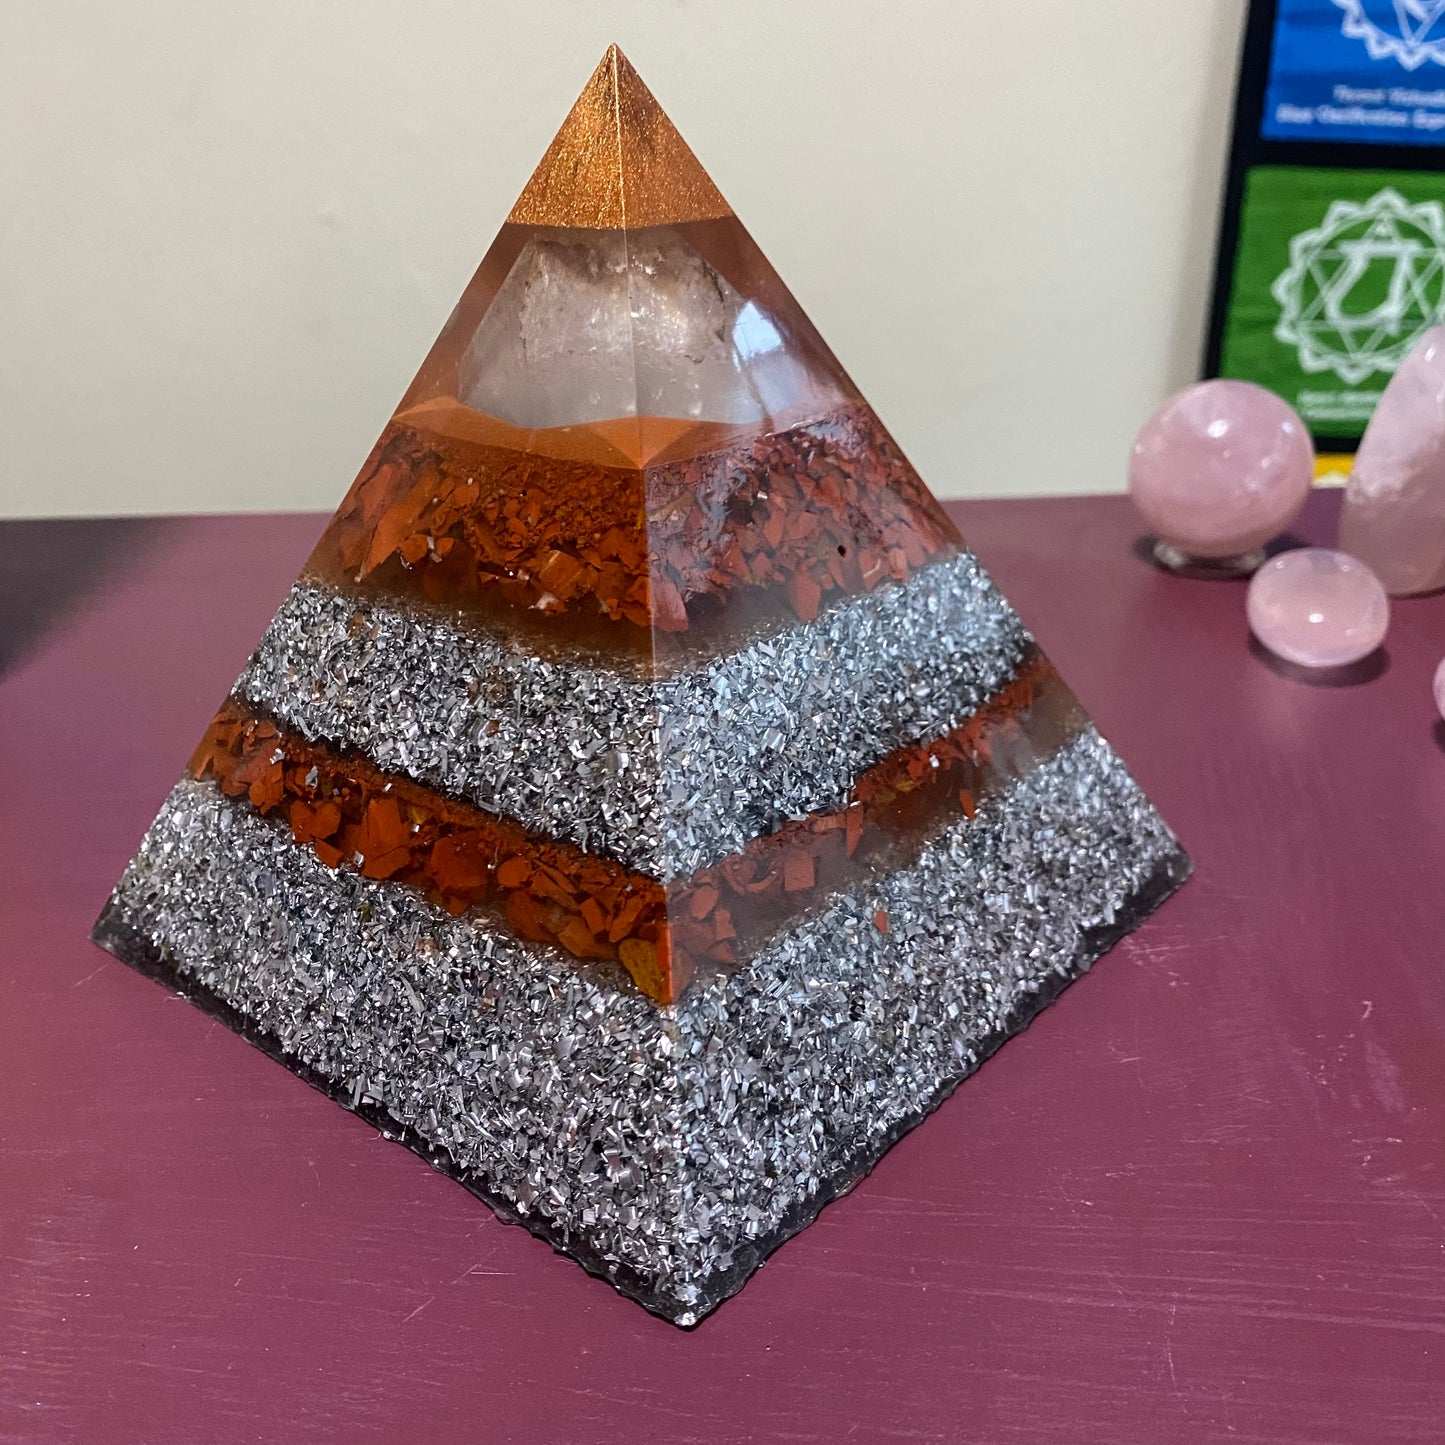 Organite Pyramid - Large - Health & Vitality - 17cm